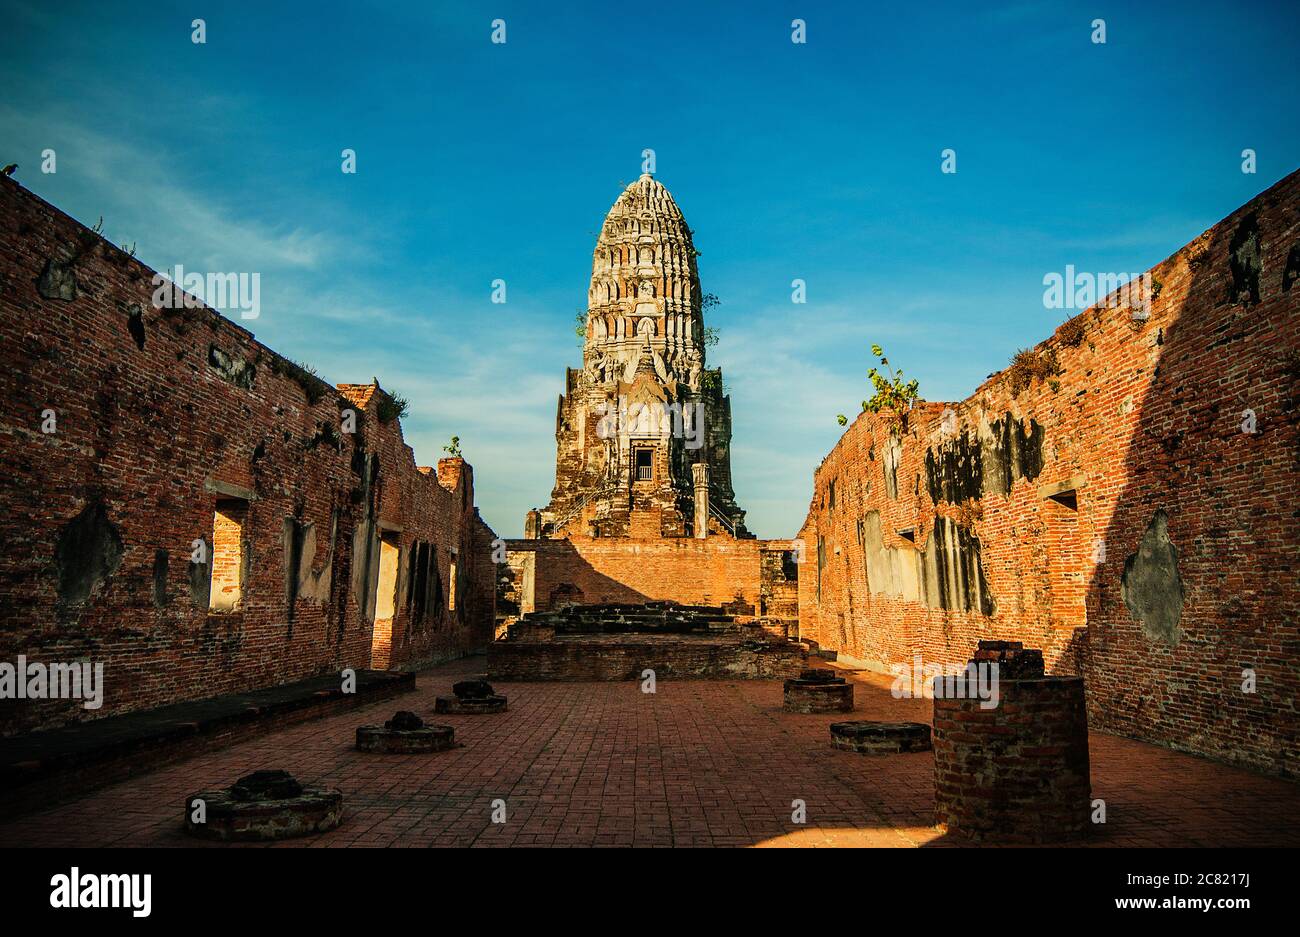 Buddhist ruins of Ayuthaya, Thailand, Southeast Asia Stock Photo